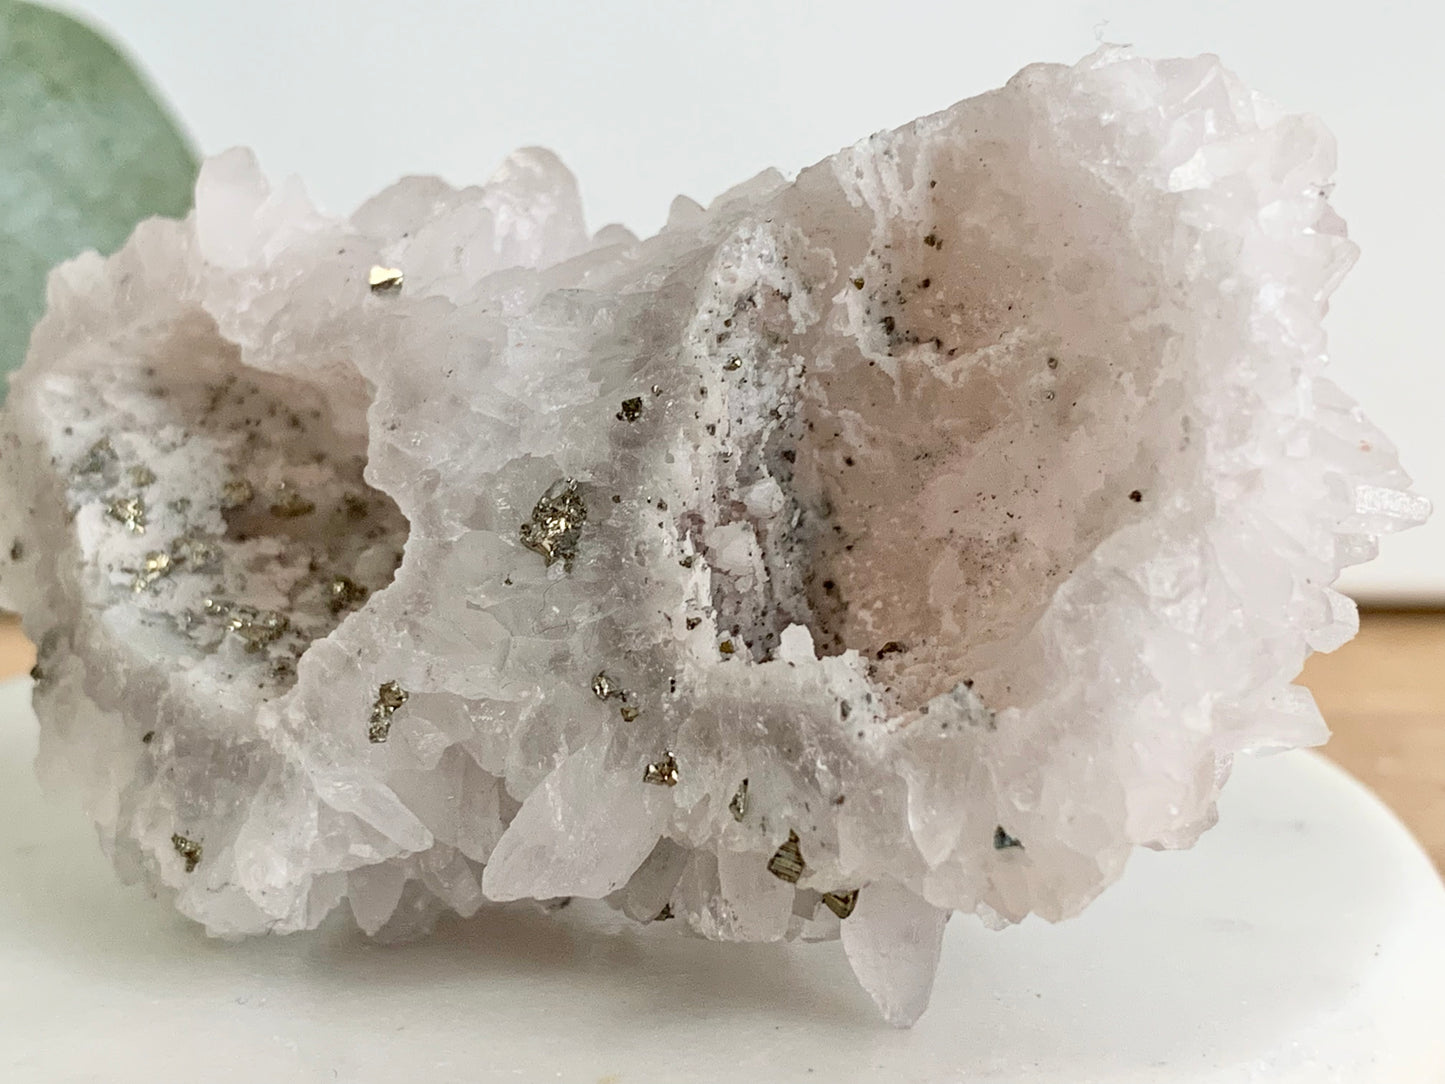 White quartz cluster with some pyrite